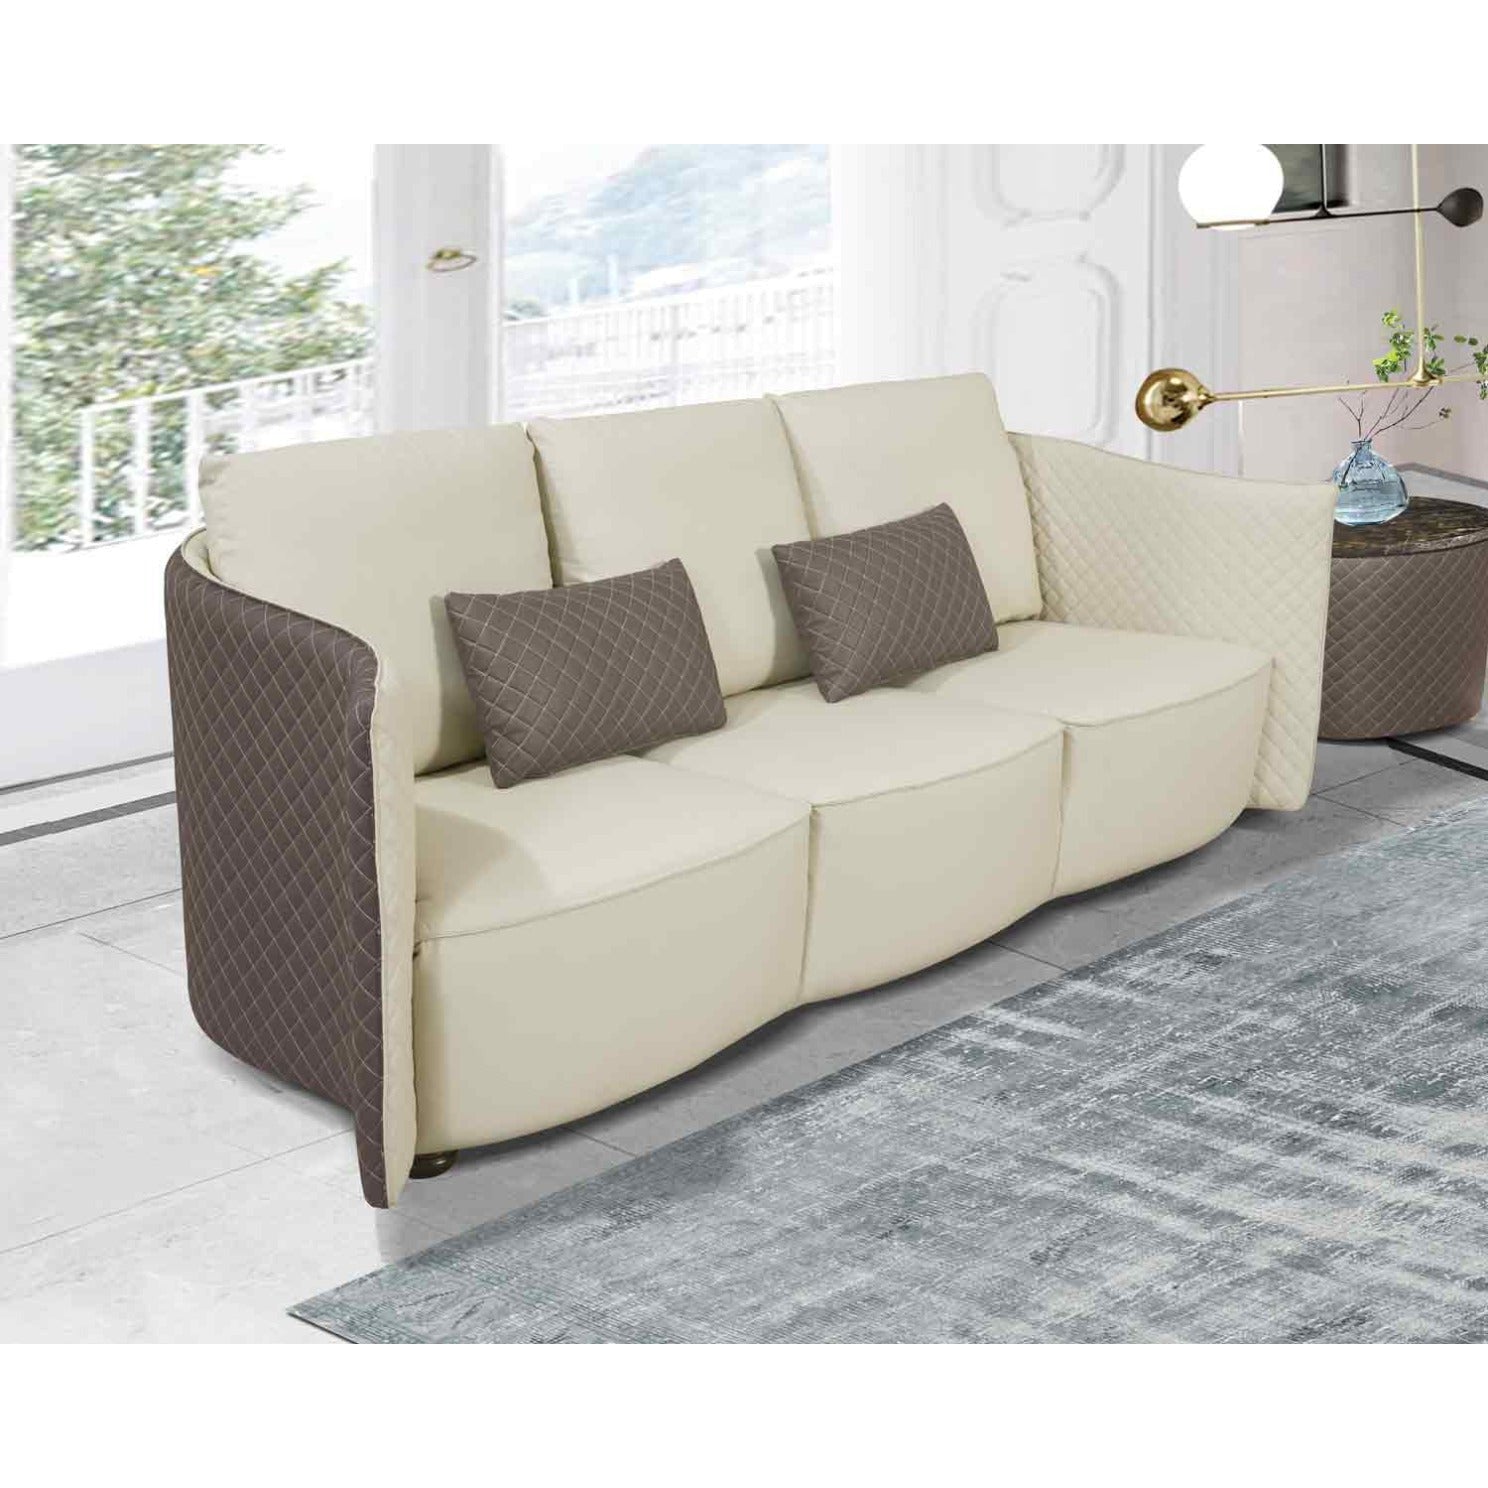 European Furniture - Makassar 3 Piece Living Room Set in Grey & Taupe - 52550-3SET - New Star Living